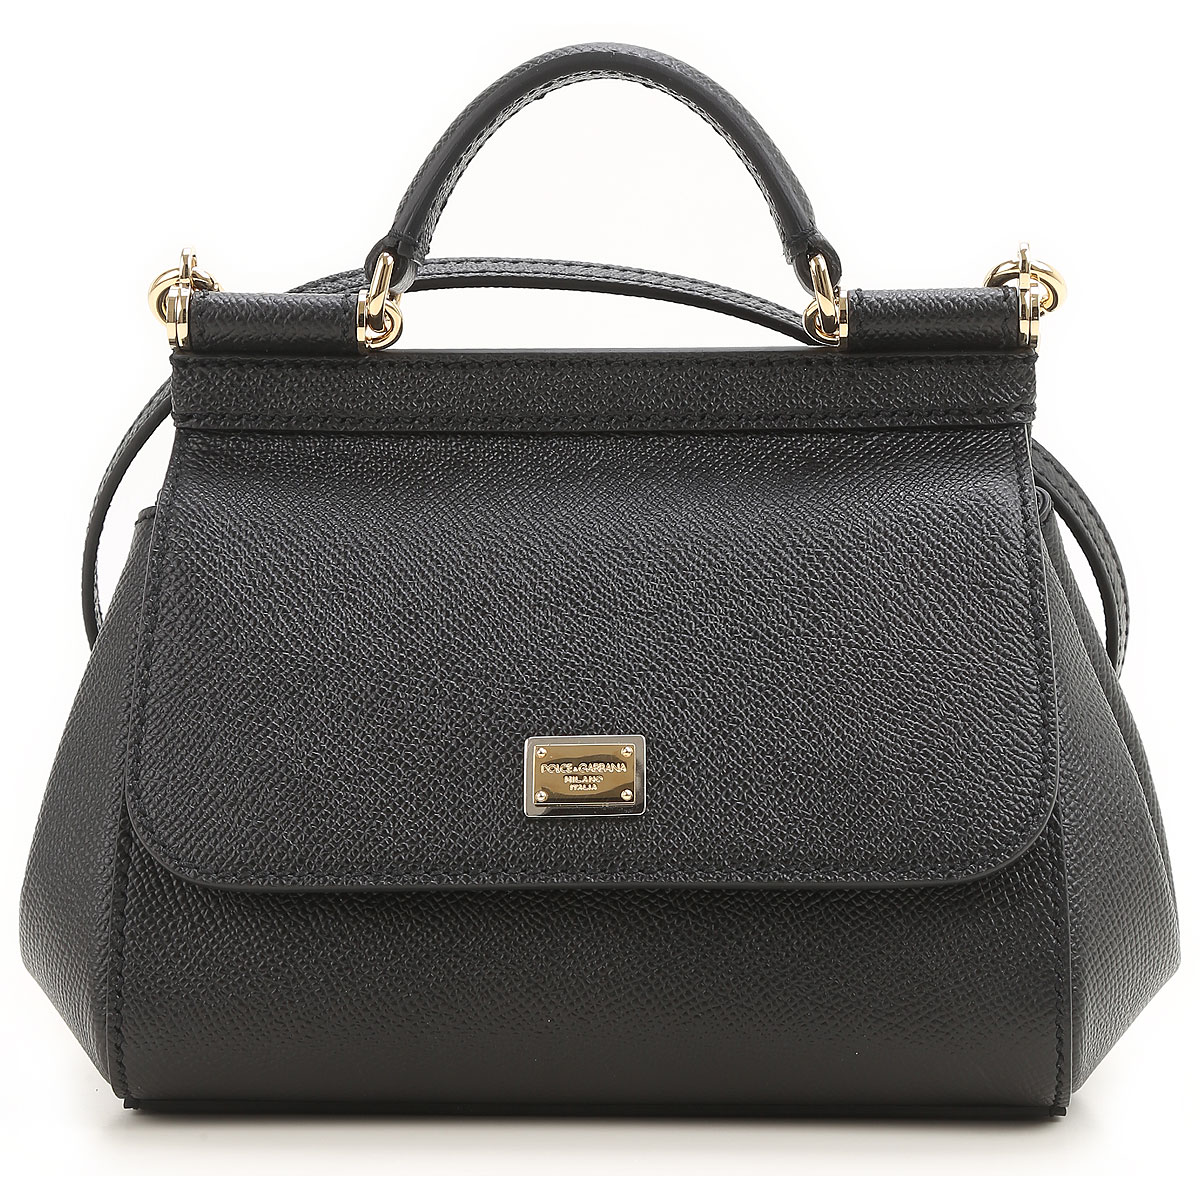 Handbags Dolce & Gabbana, Style code: bb6271-a1001-80999